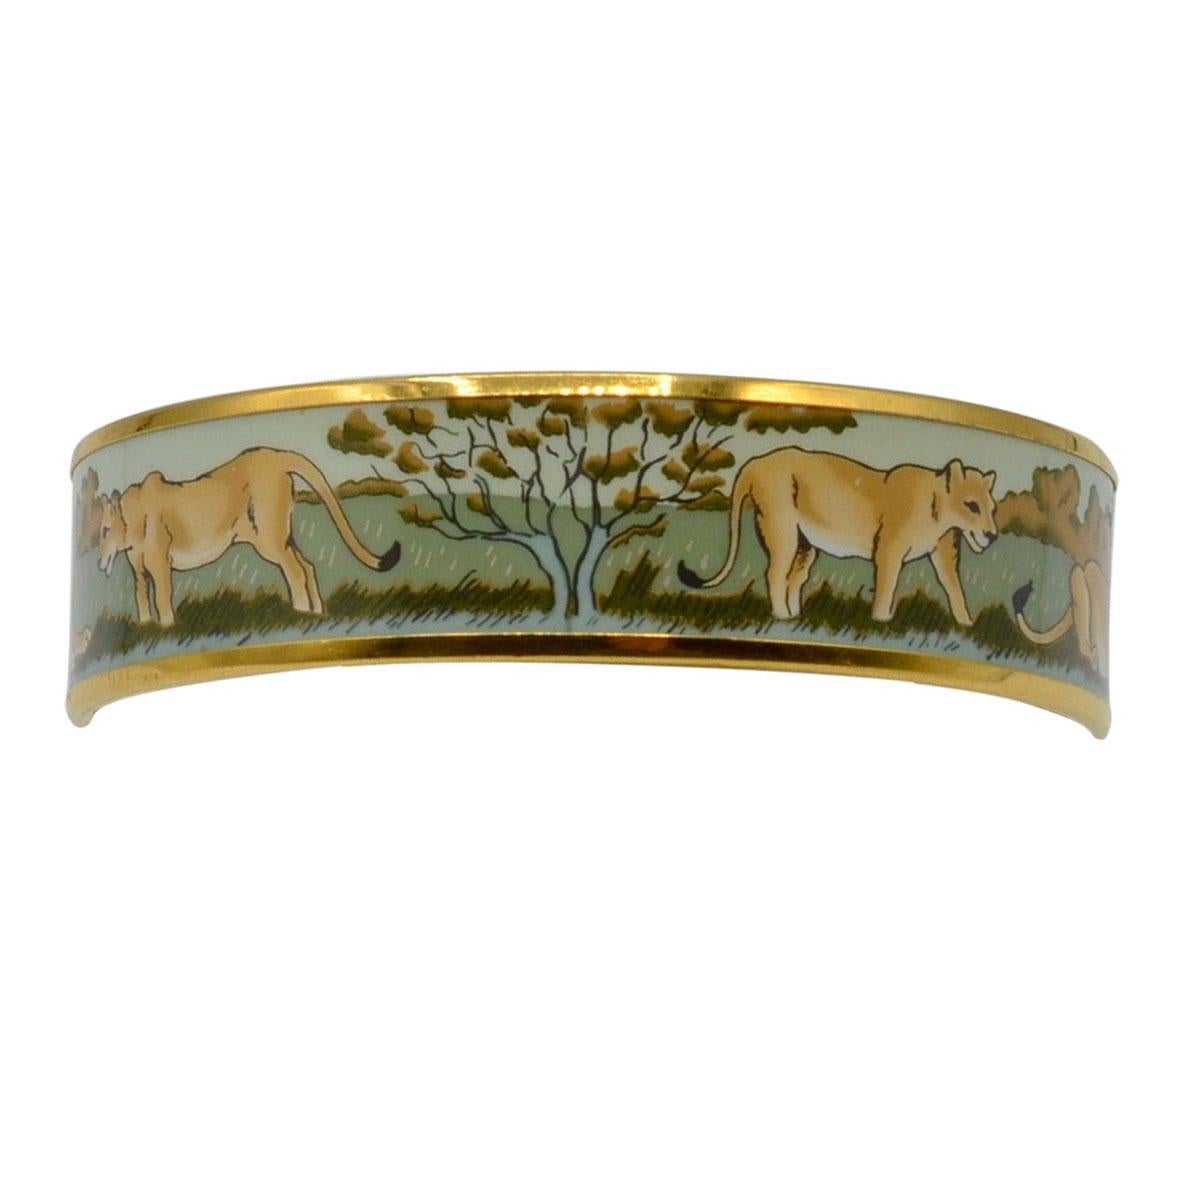 Hermes "Safari" Enamel and Gold Plated Bangle Bracelet